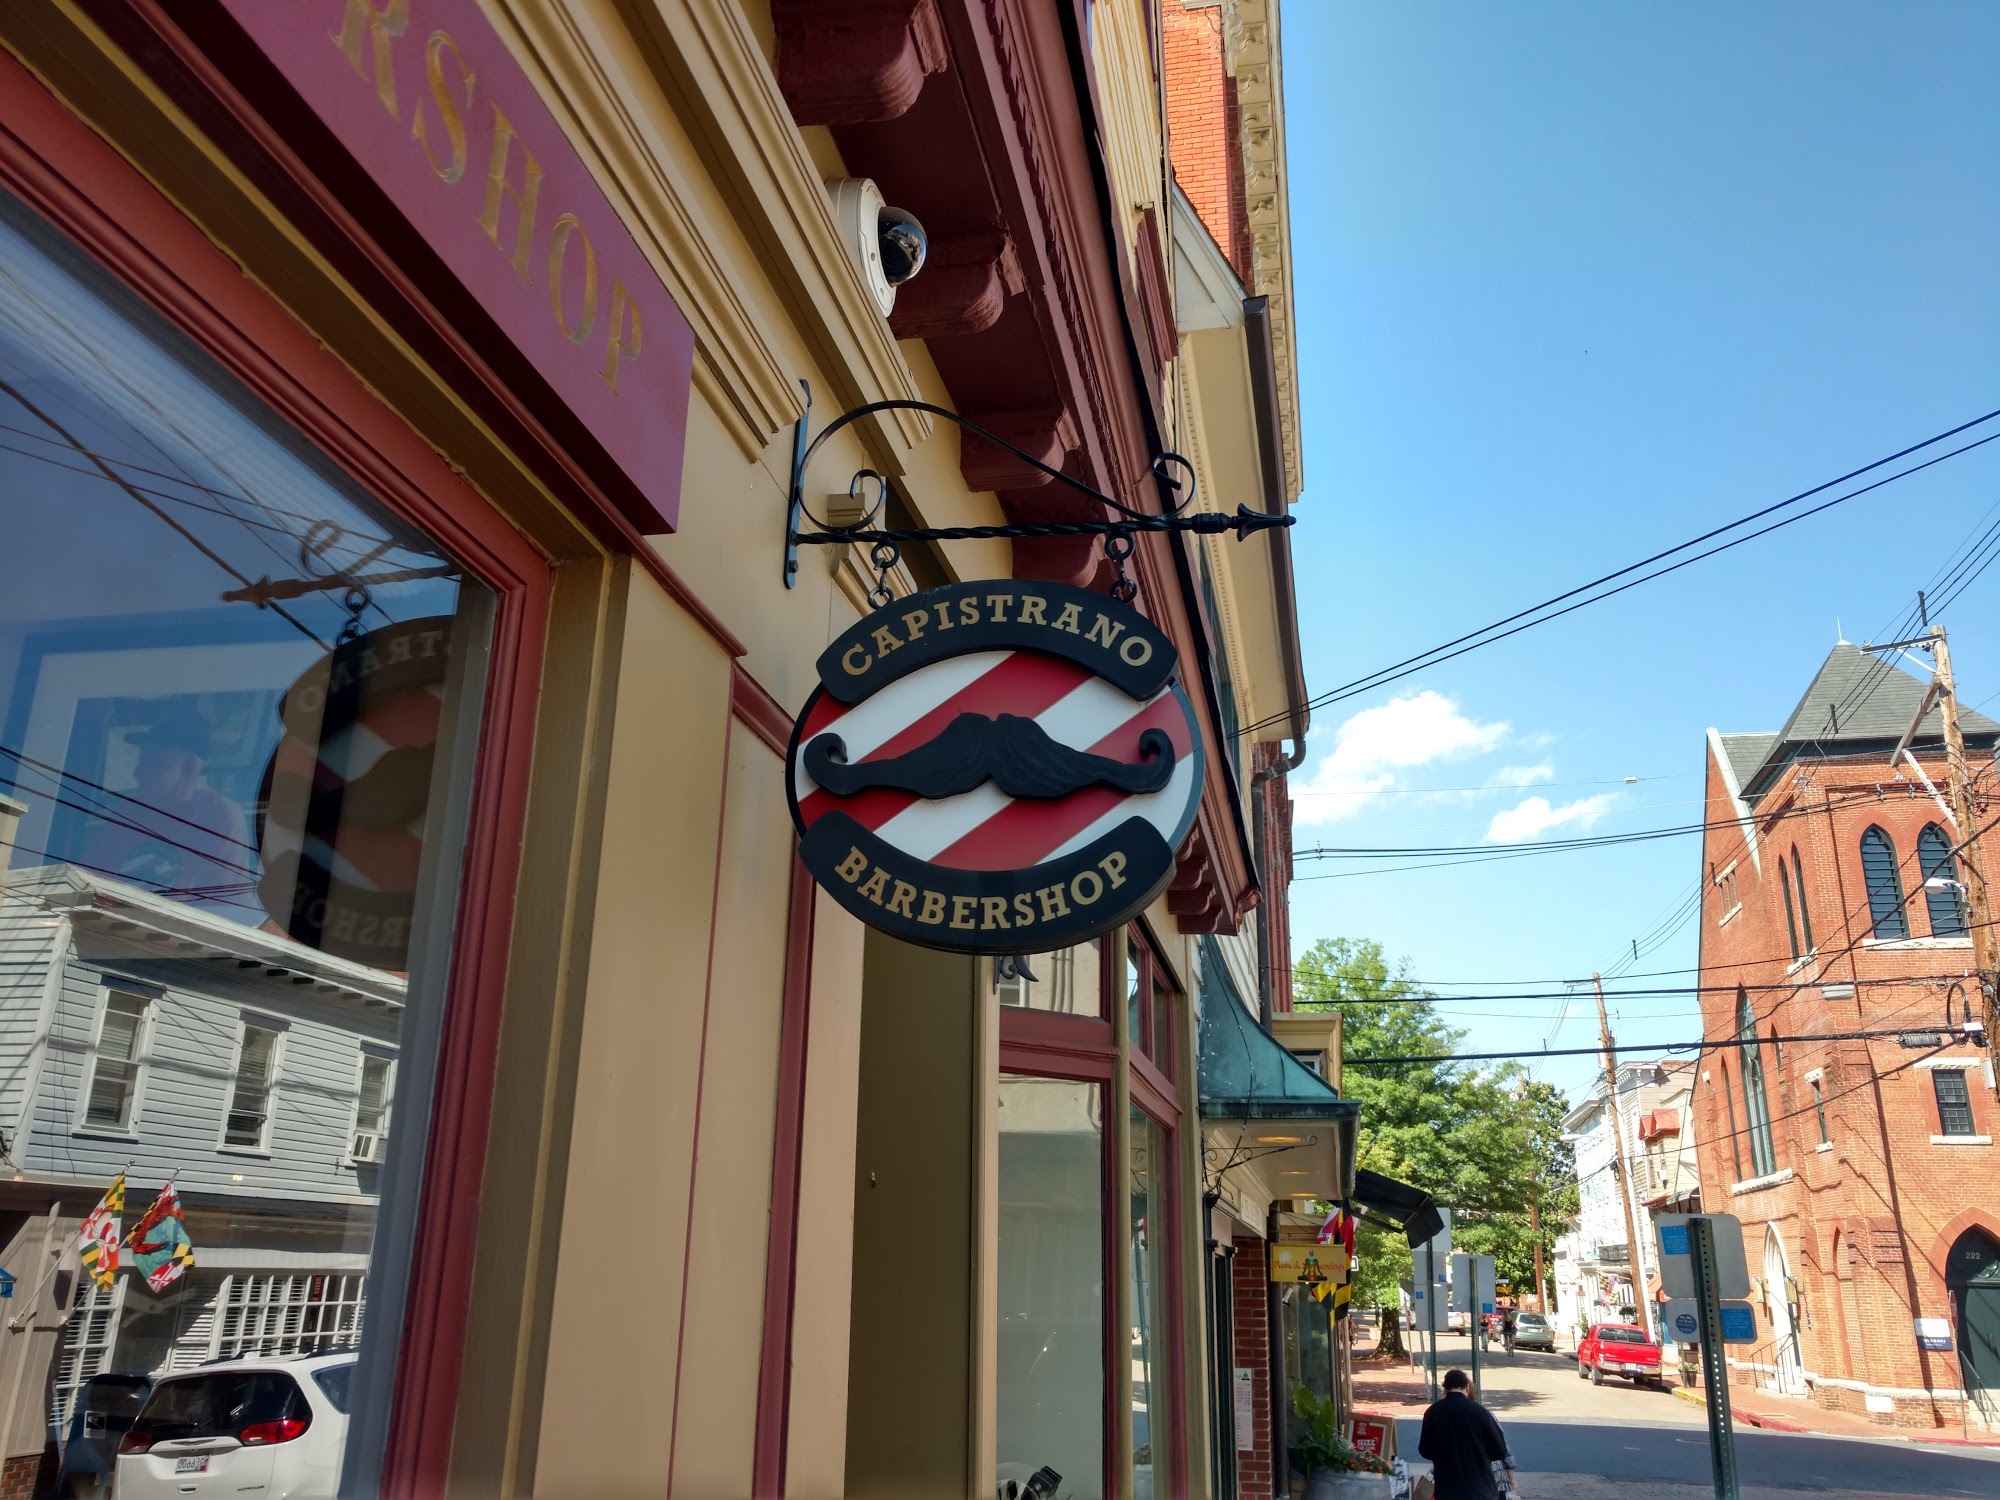 Capistrano Barber Shop